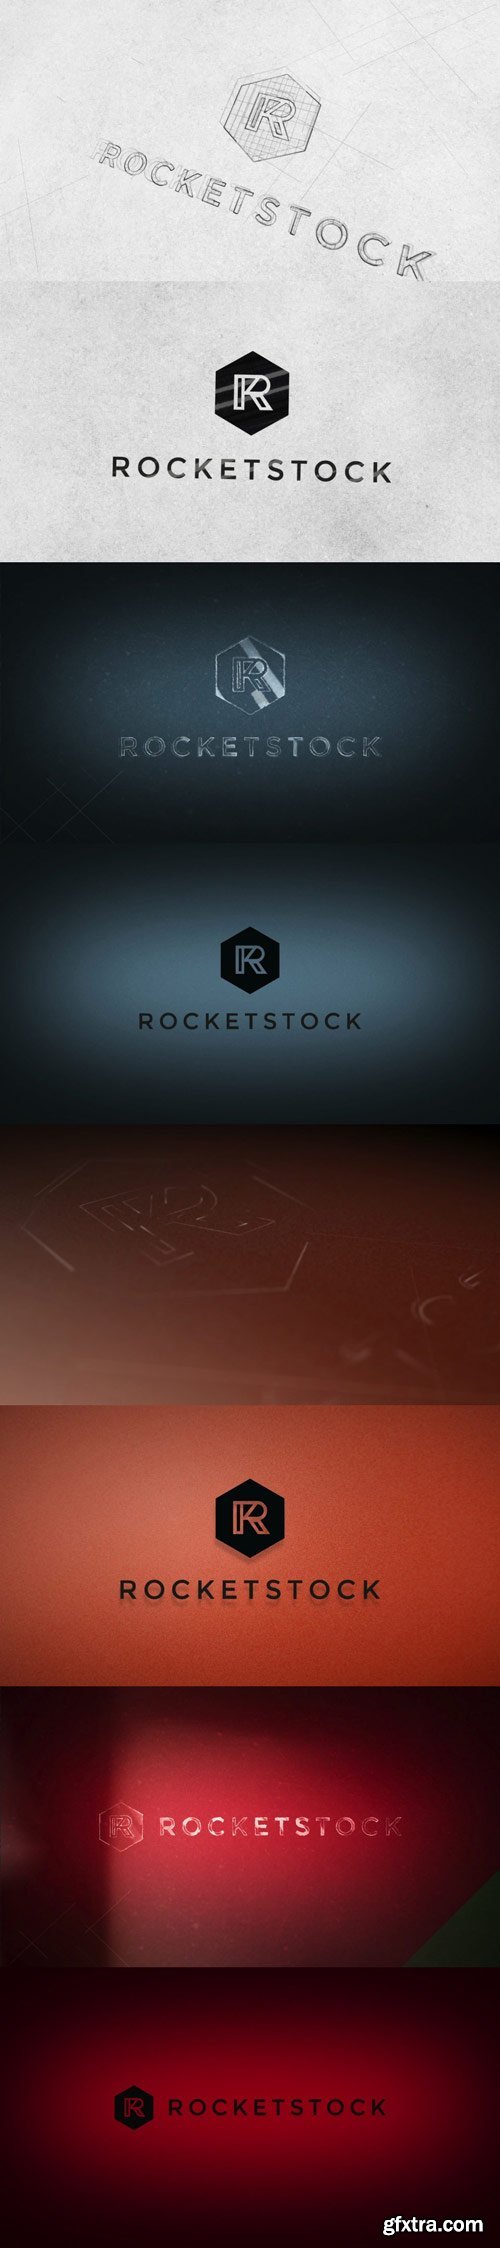 RocketStock - Sketchpad Organic Logo Reveal